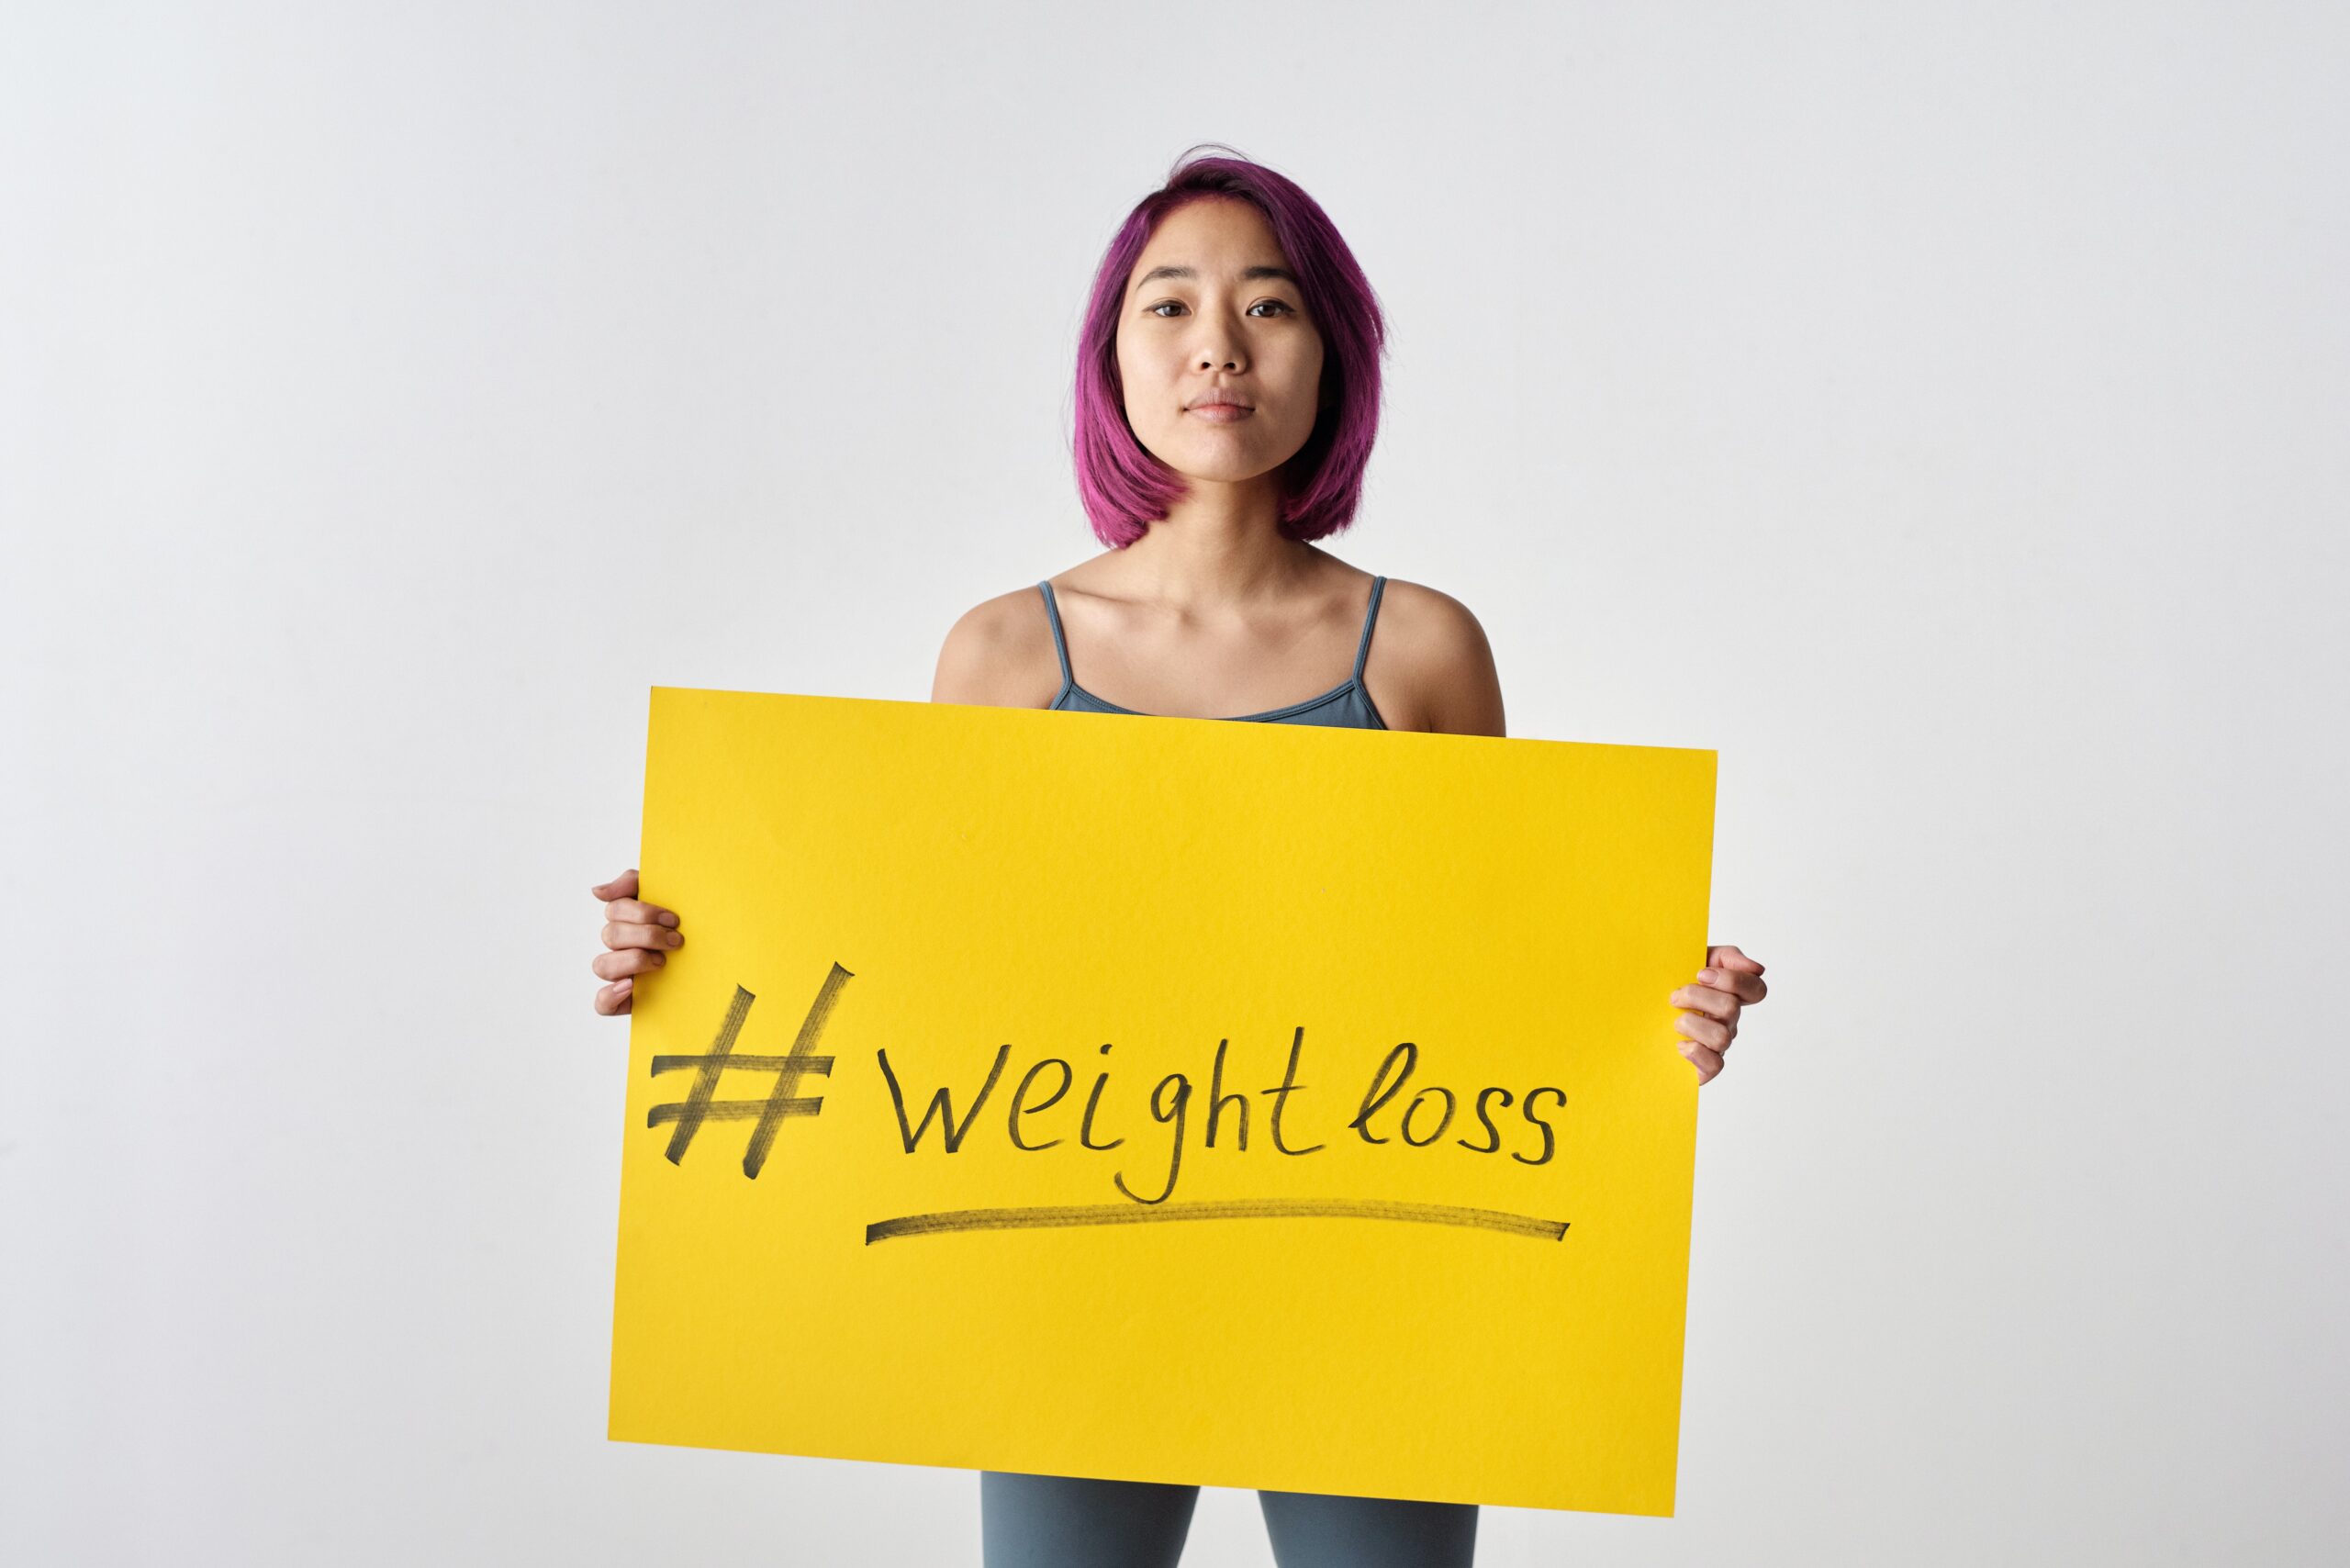 Weight-loss